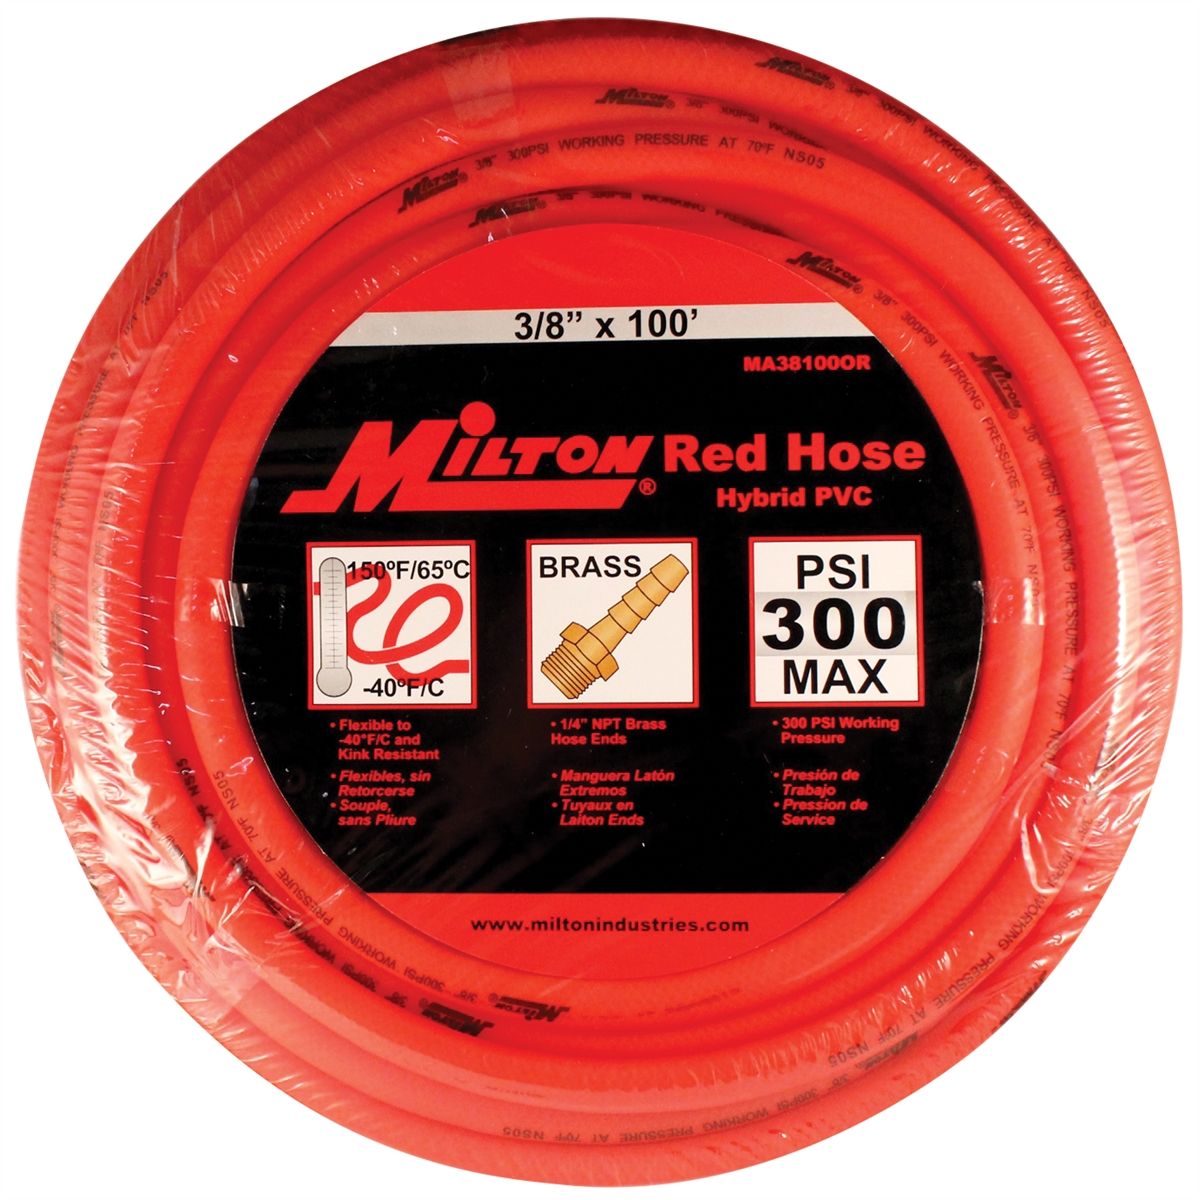 Milton Red Hose PU Hybrid 3/8" X 100' w/1/4" NPT